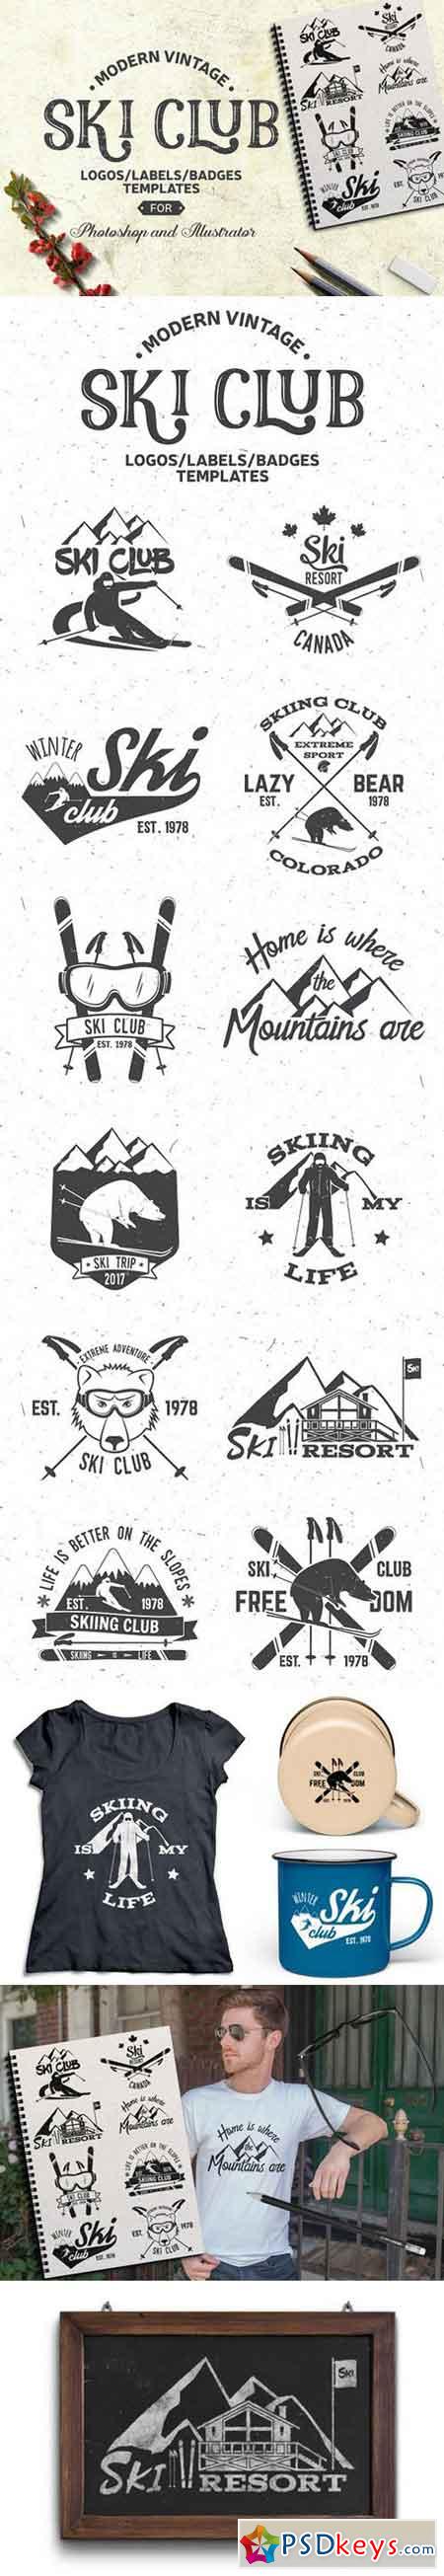 Vintage Ski Club Logos Labels Badges 1019173